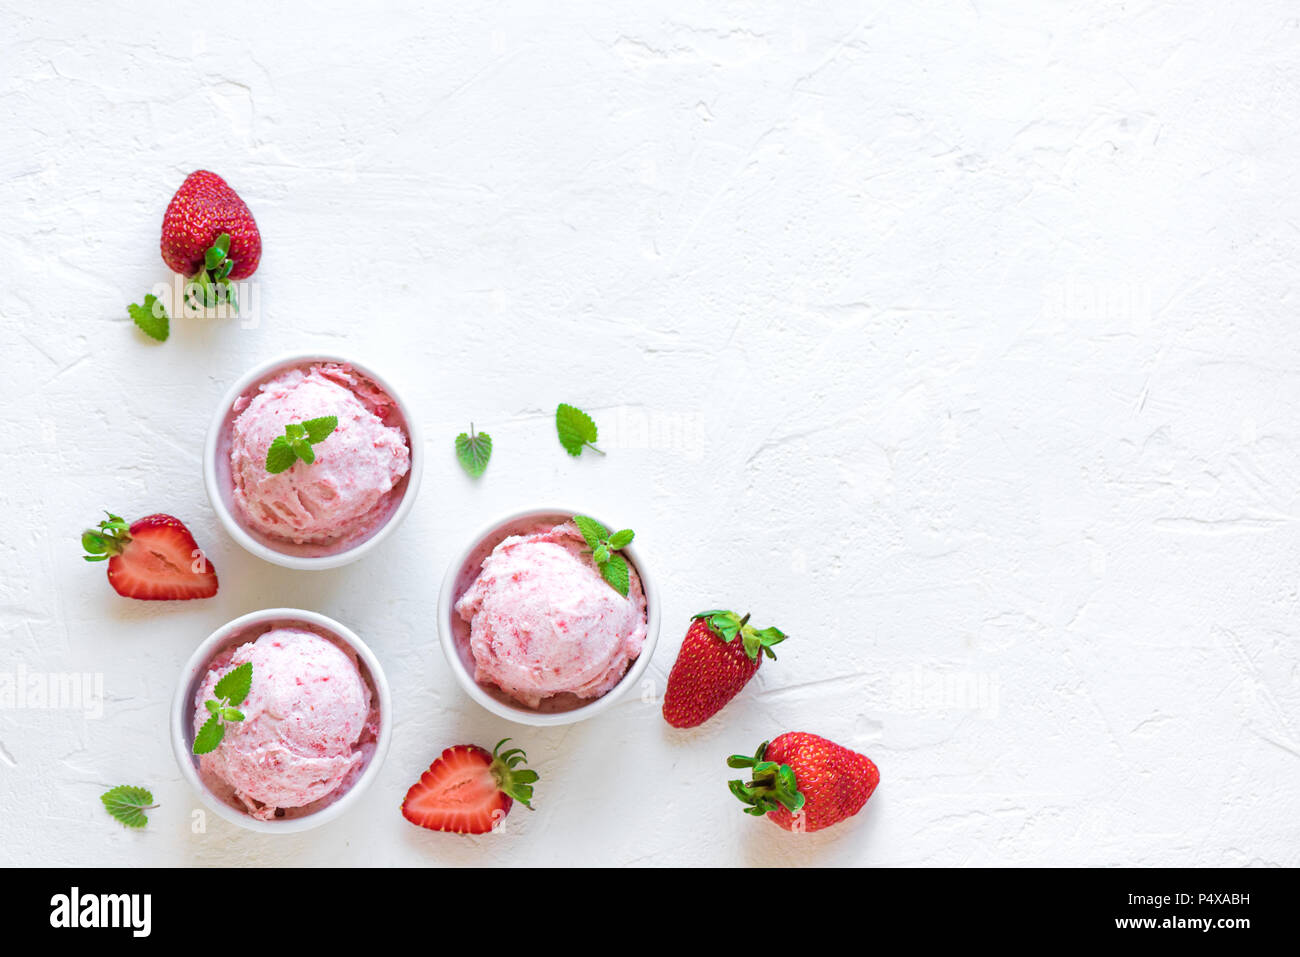 Strawberry ice cream and fresh strawberries on white background, top view. Three bowls of strawberry ice cream, healthy summer dessert. Stock Photo